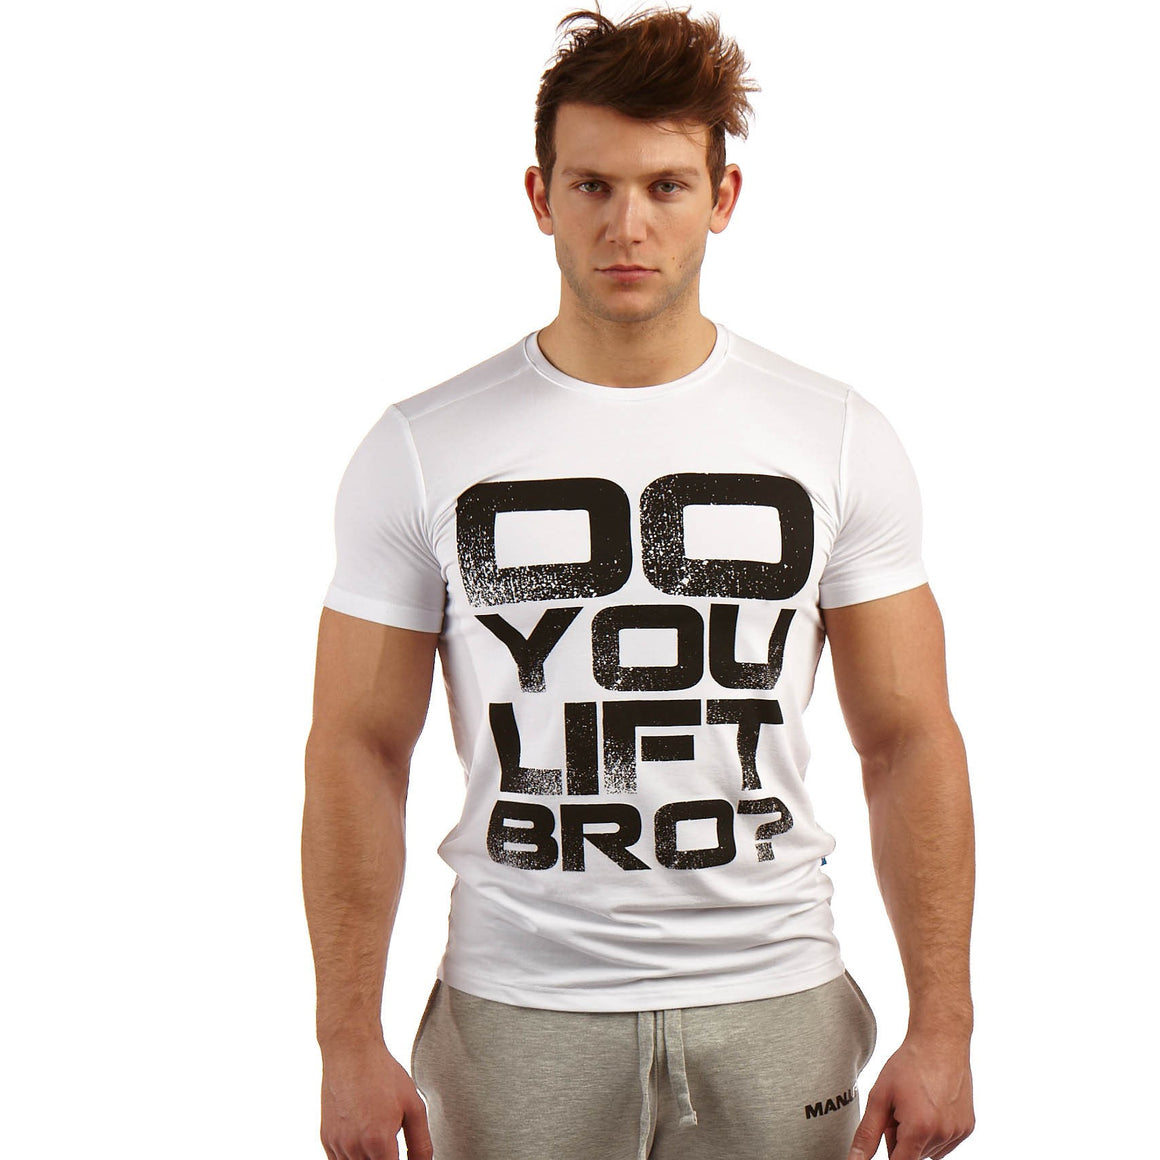 Man Up Carbon T-Shirt - Ript Is The New Massive